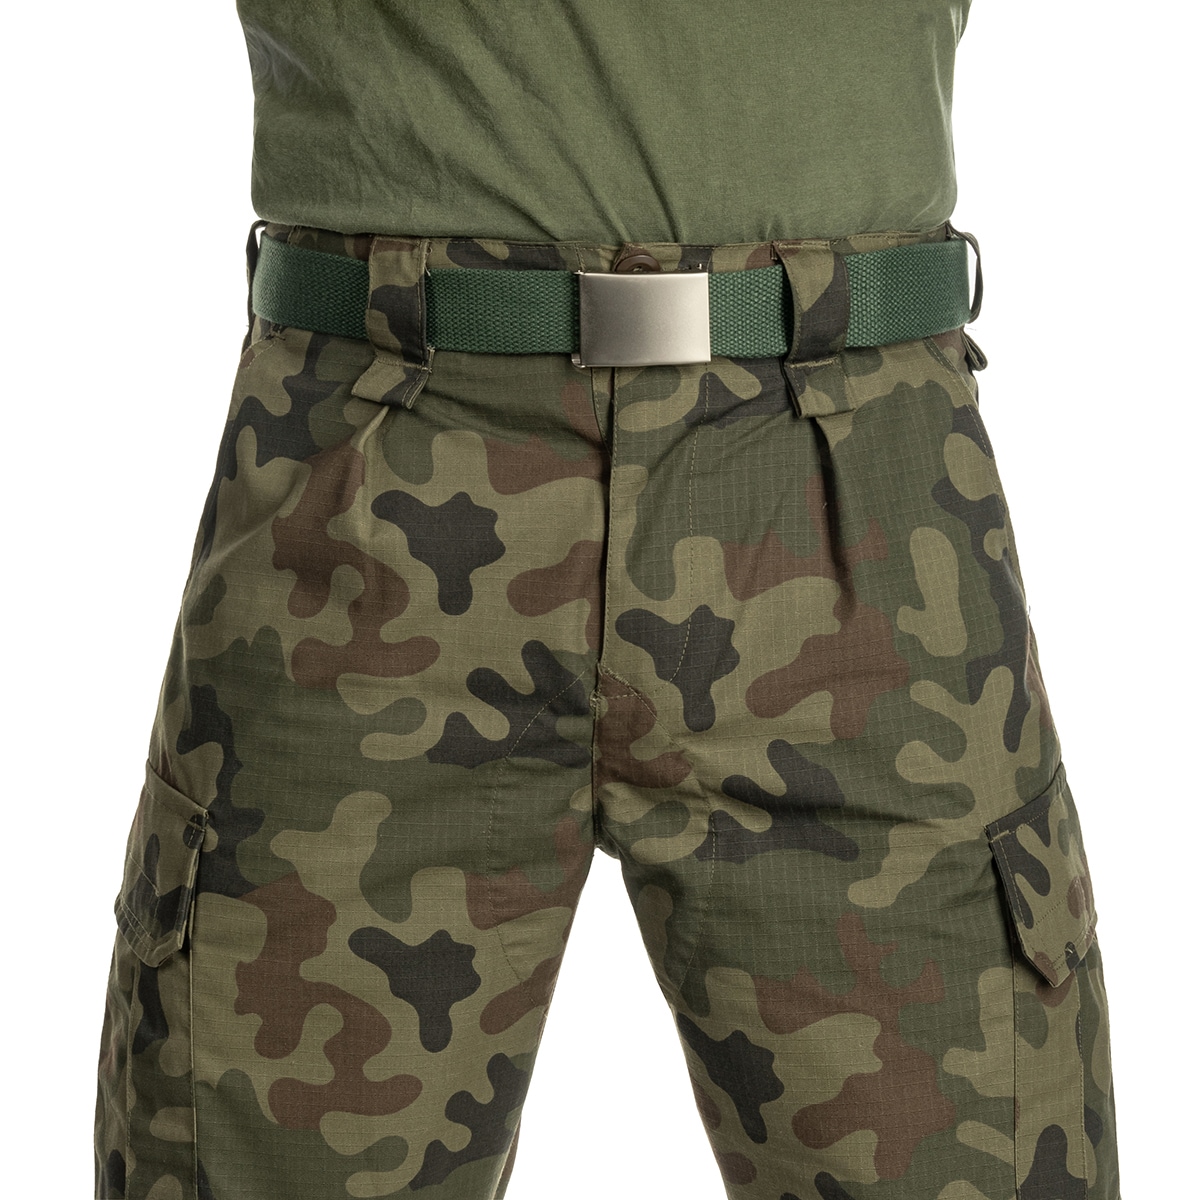 Spodnie mundurowe MaxPro-Tech WZ 2010 Rip-Stop - PL Camo